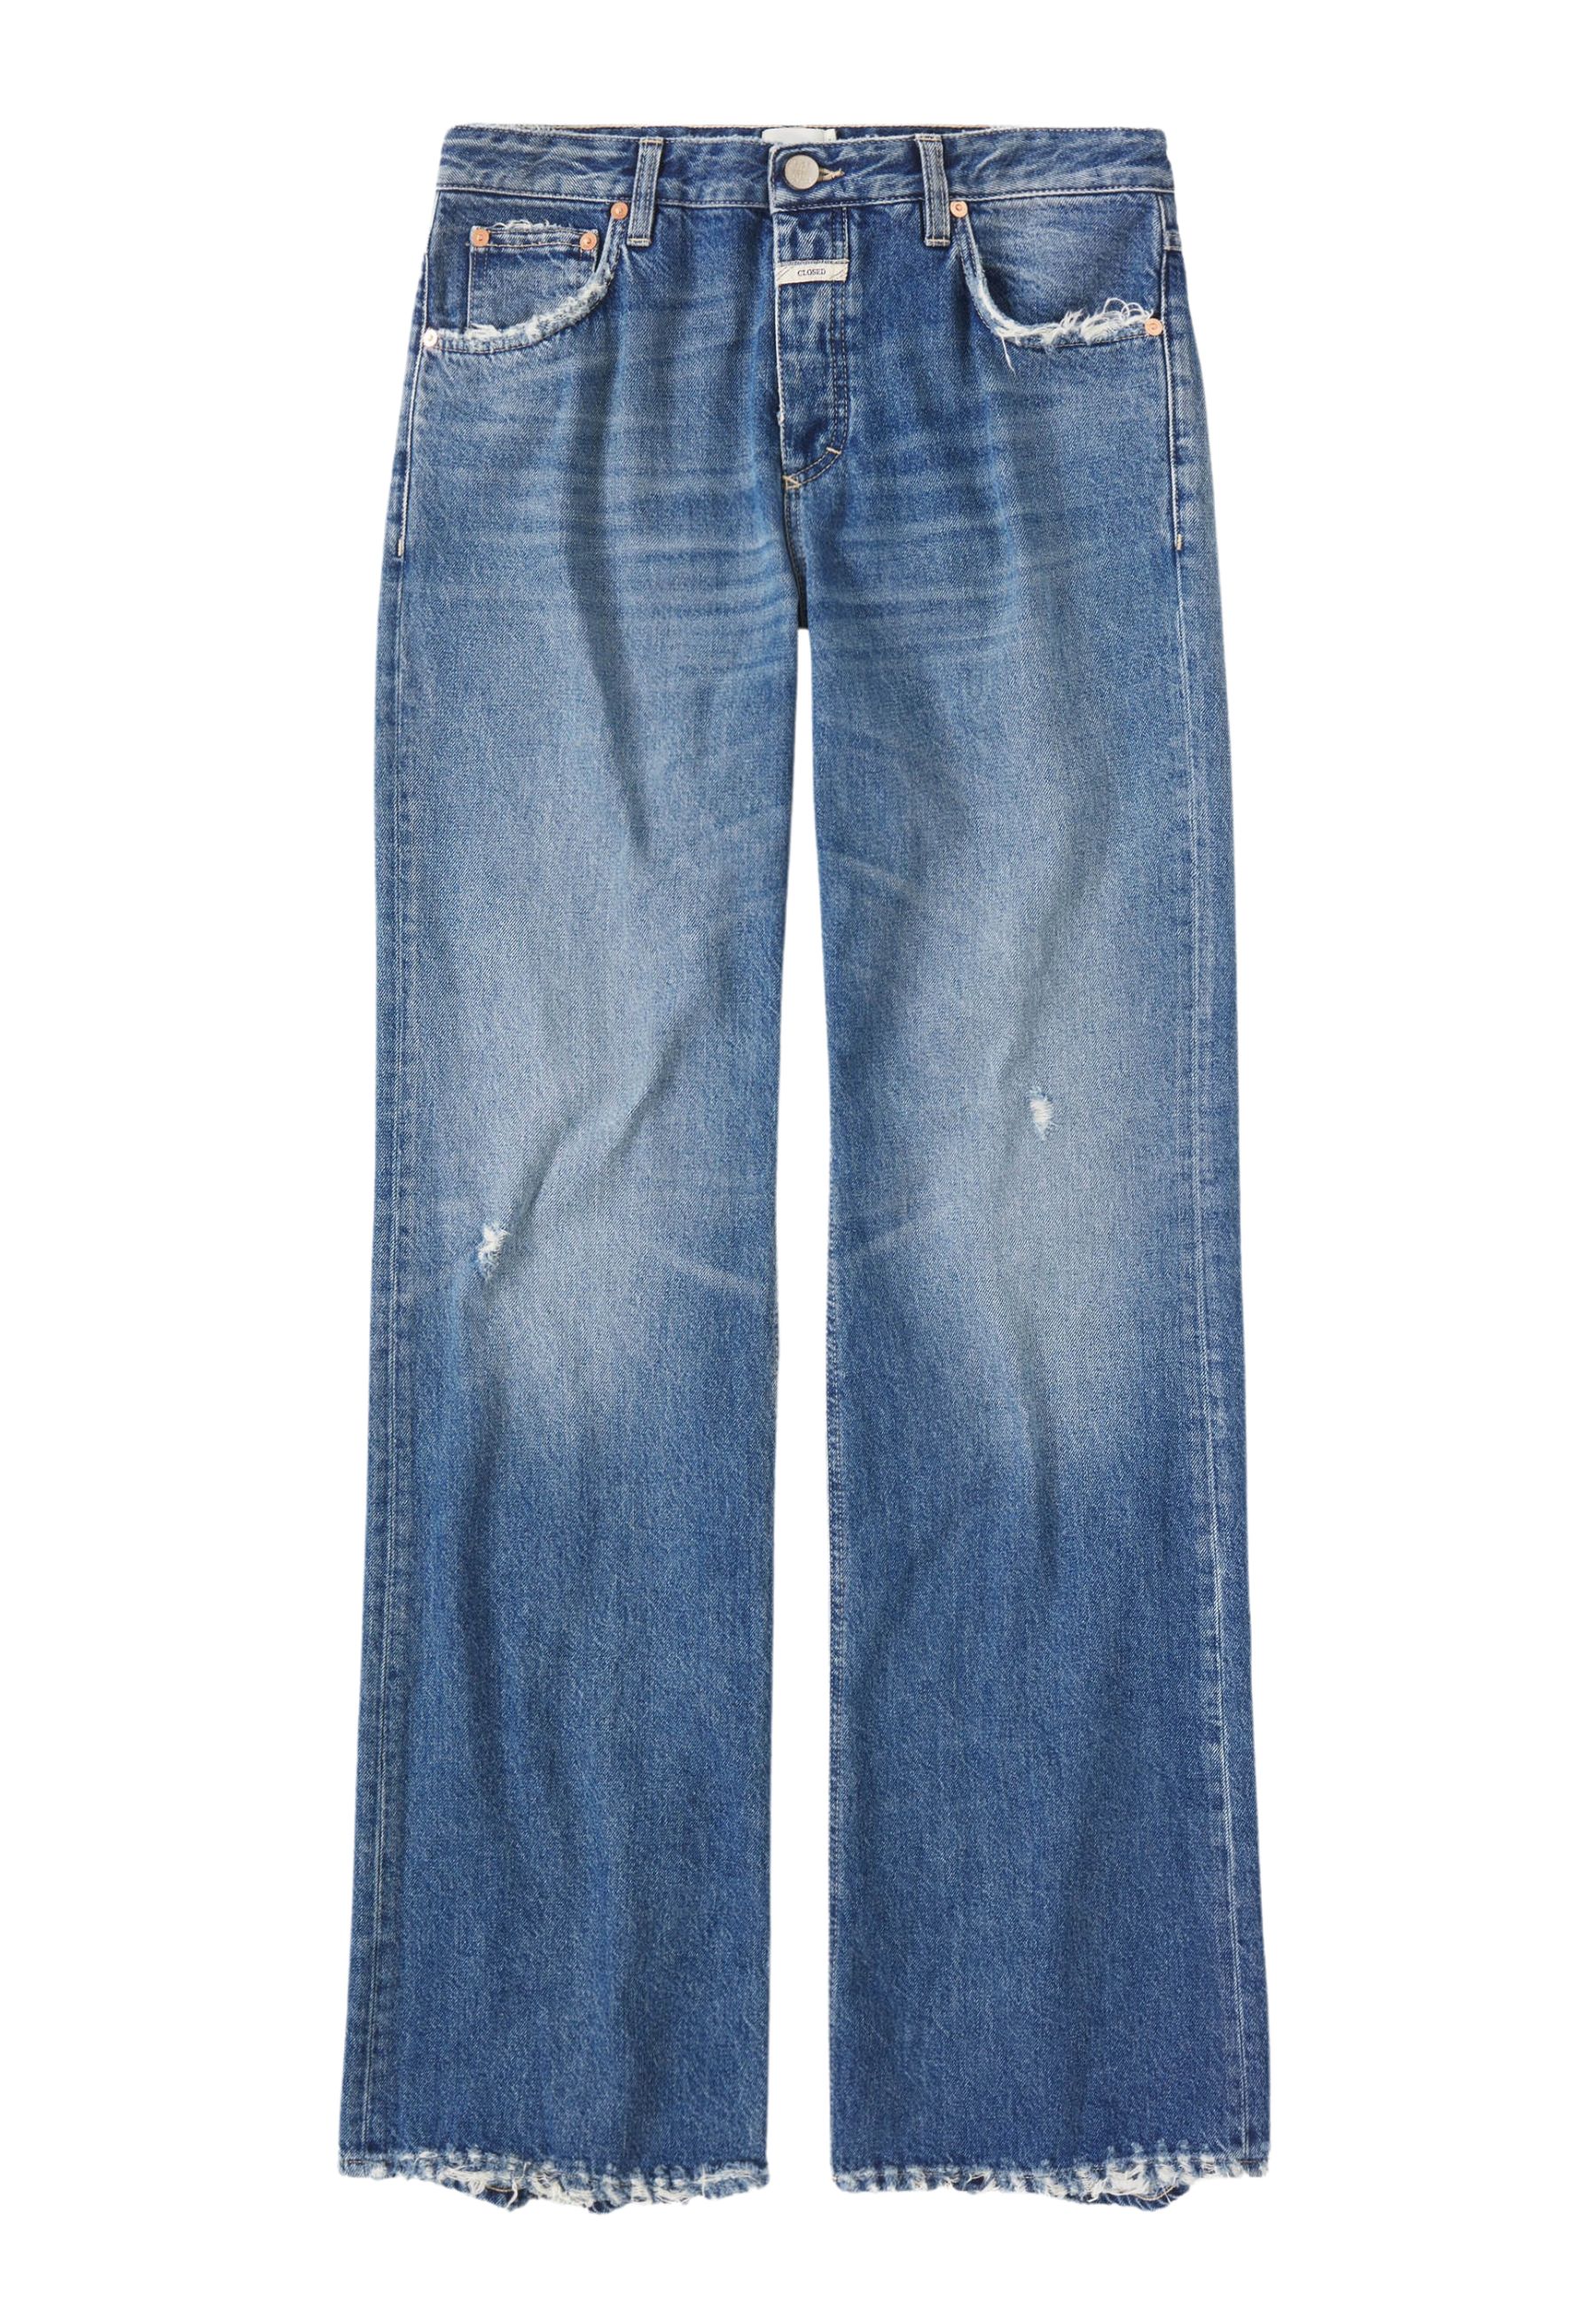 Closed Jeans Middenblauw Katoen maat 29/30 Gillan flared jeans middenblauw